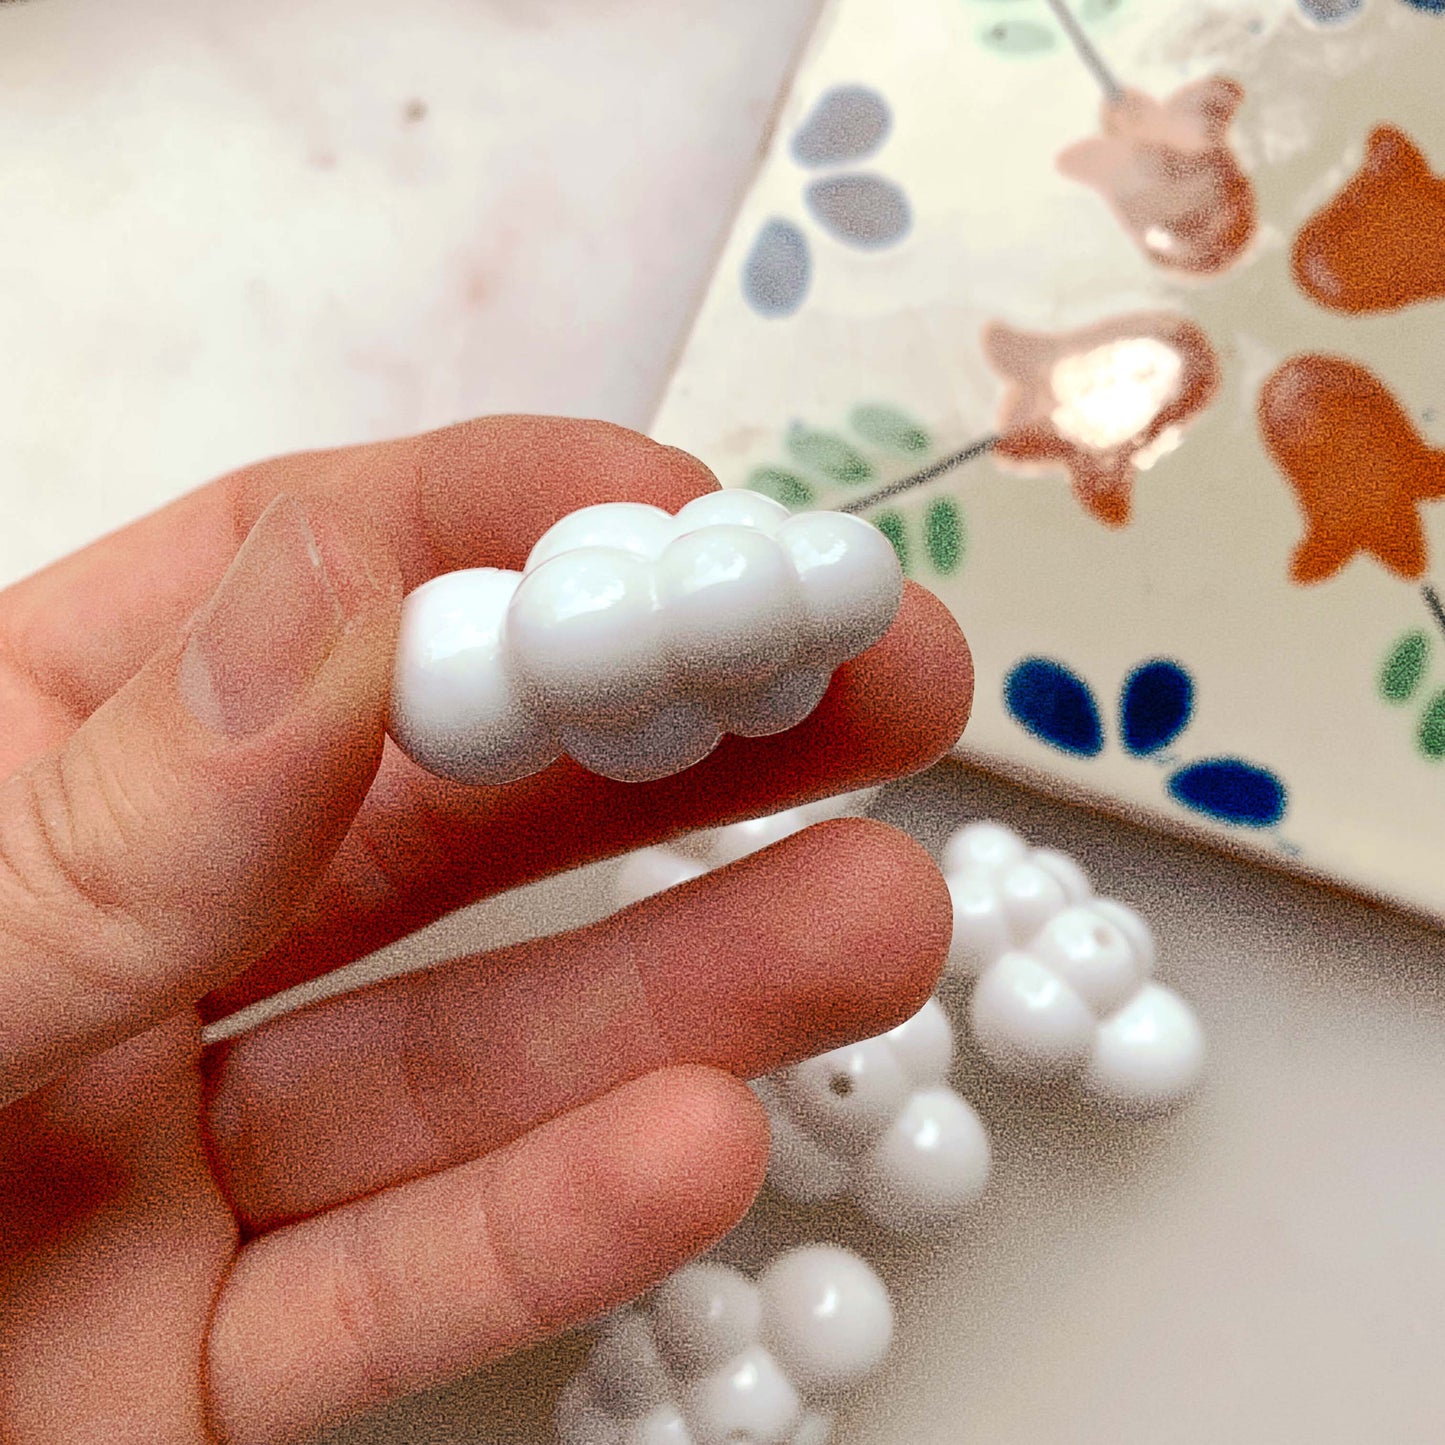 Cloud - plastic bead